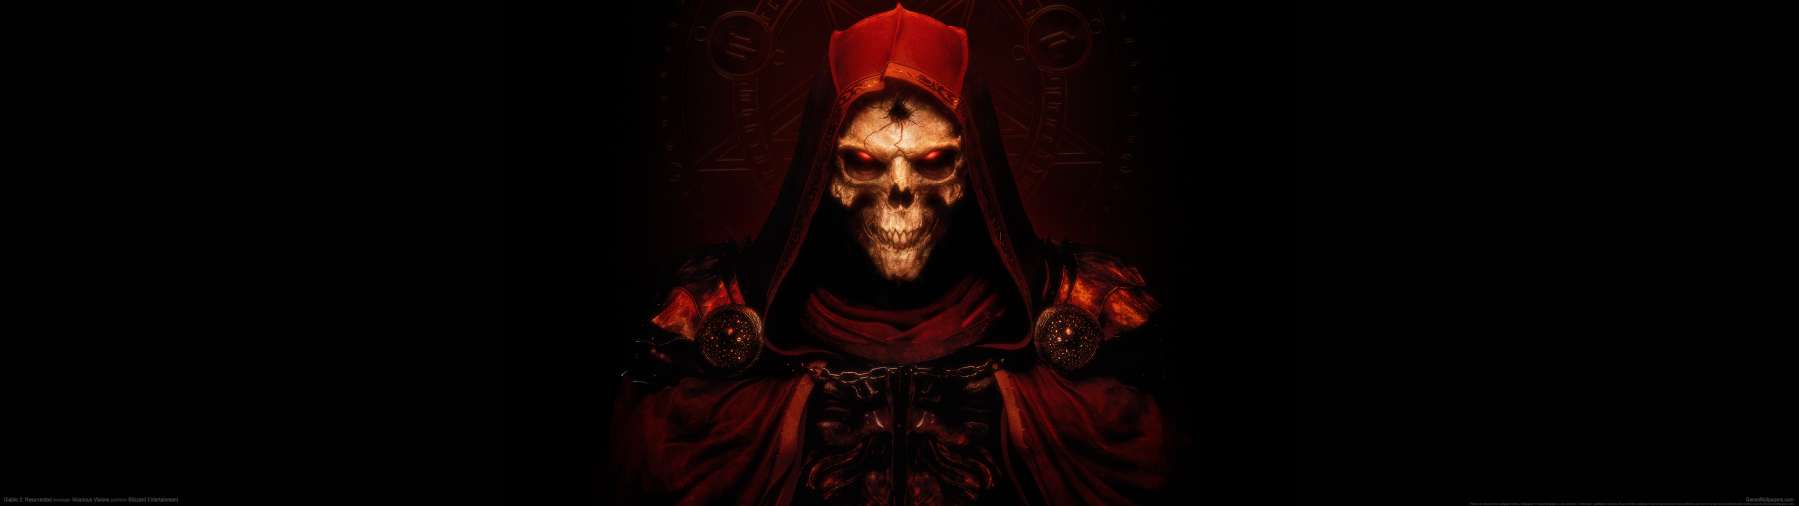 Diablo 2: Resurrected wallpaper or background